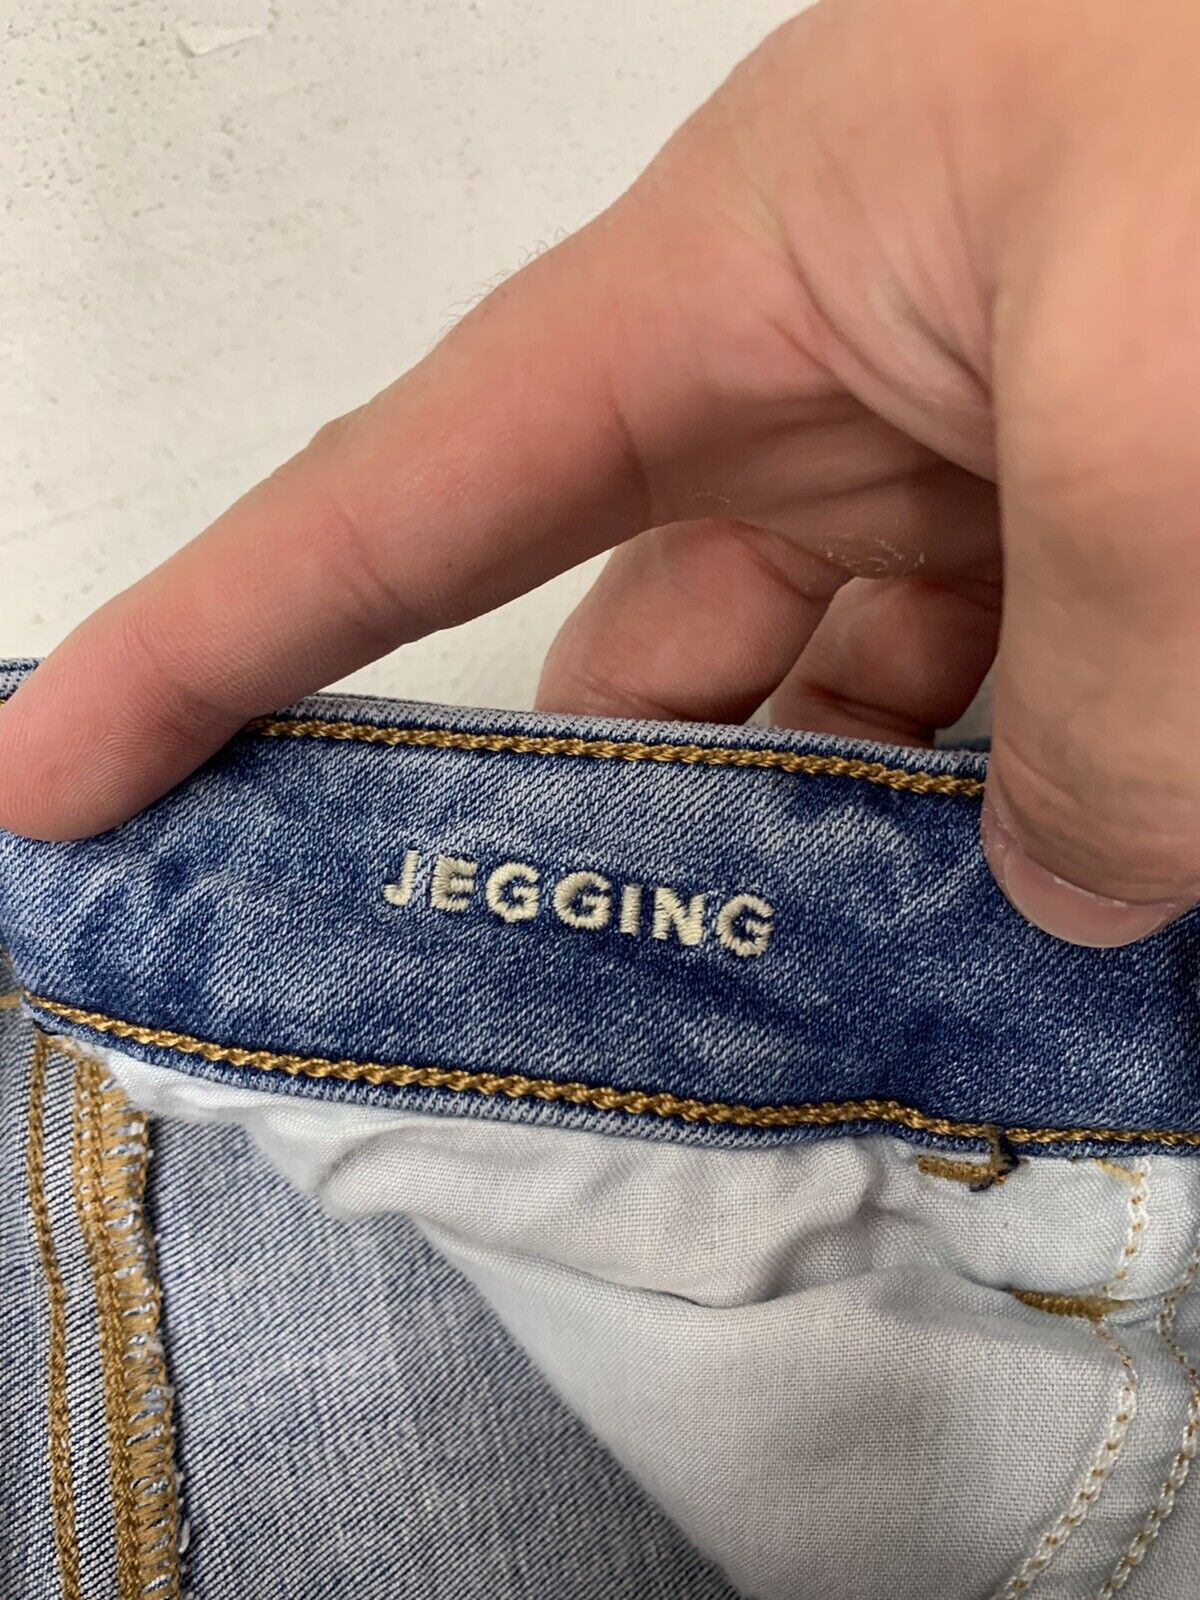 American Eagle Womens Blue Denim Jegging Jeans Size 0 - beyond exchange